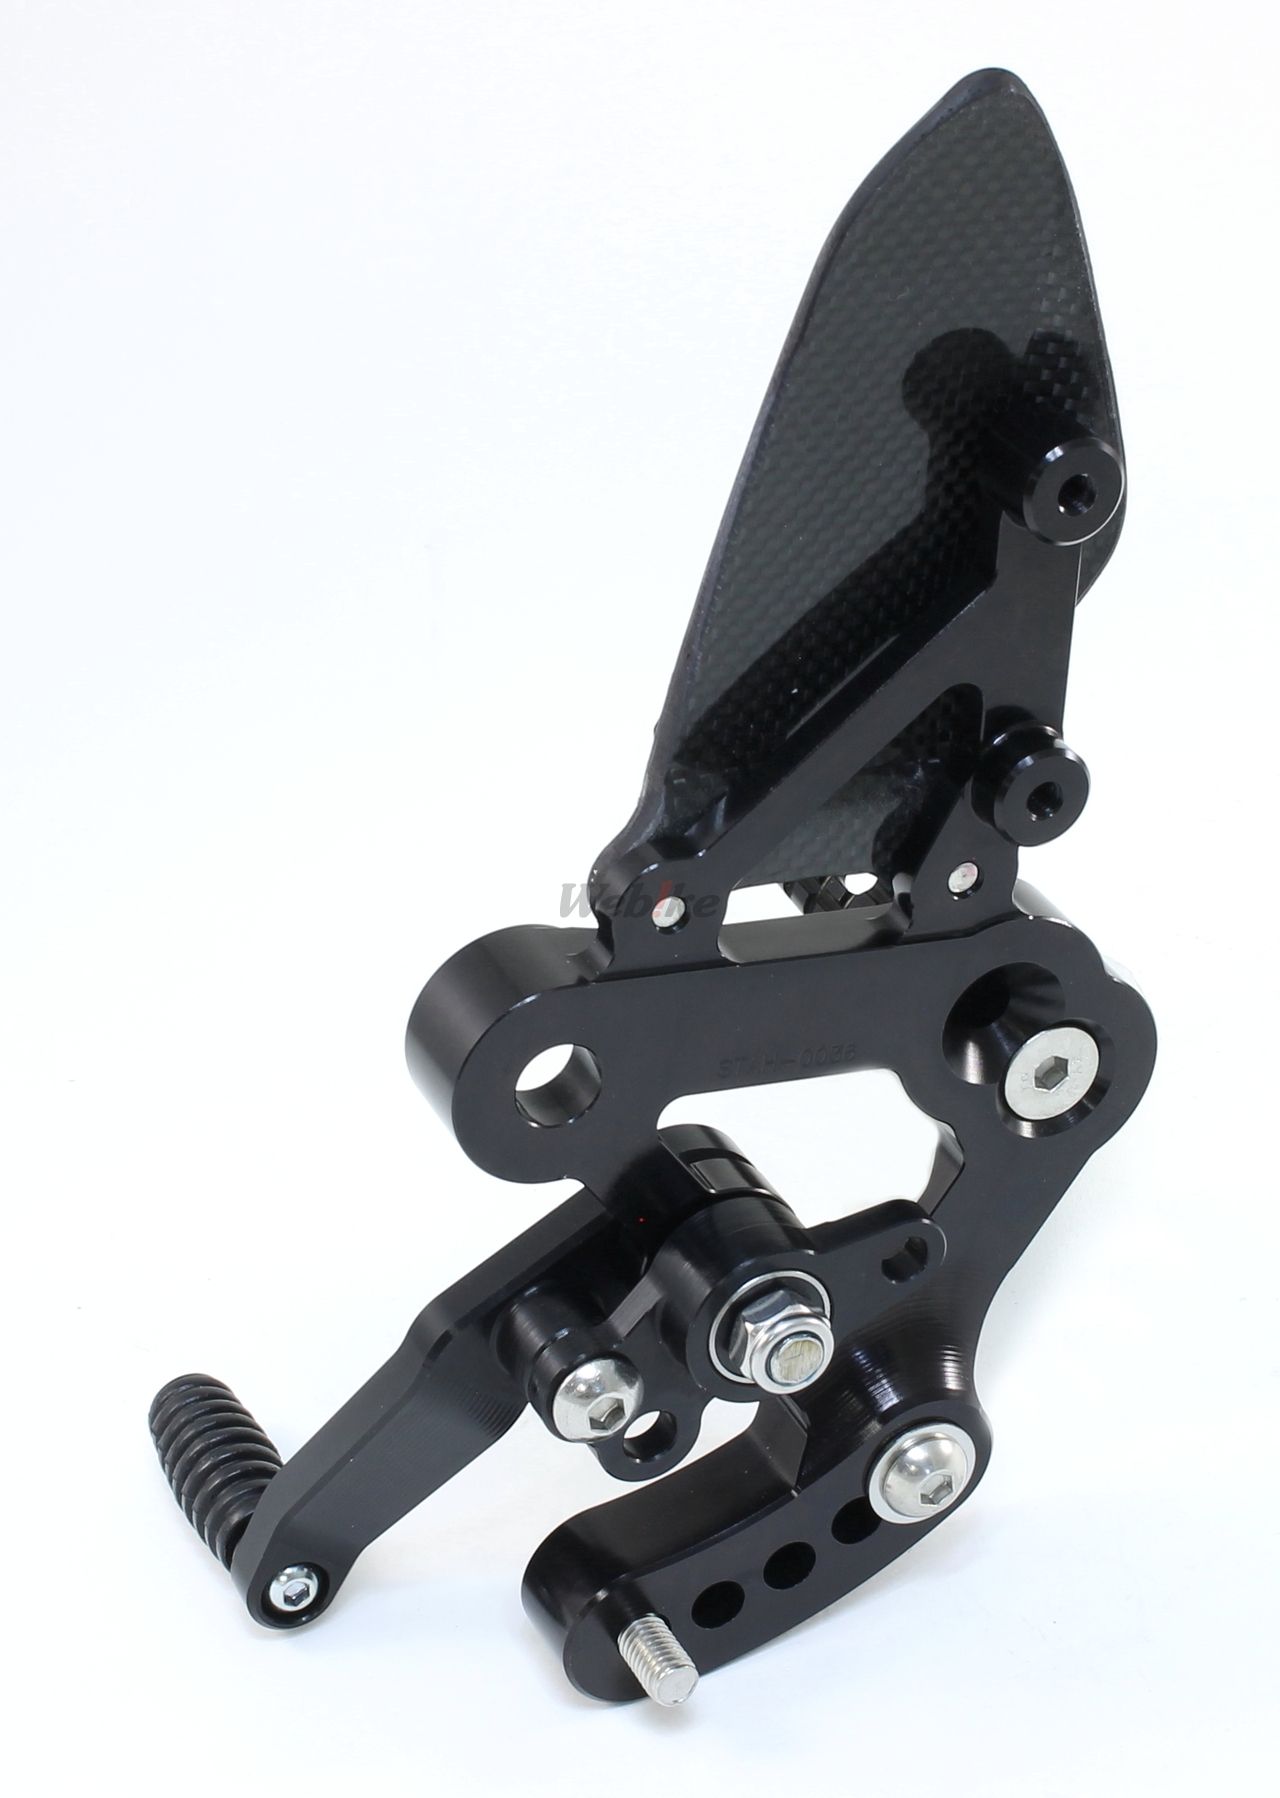 【TYGA PERFORMANCE】.Racing Rear Set Kit, Adjustable, Black with Black Slot Cover, MSX125 Grom - Webike Thailand